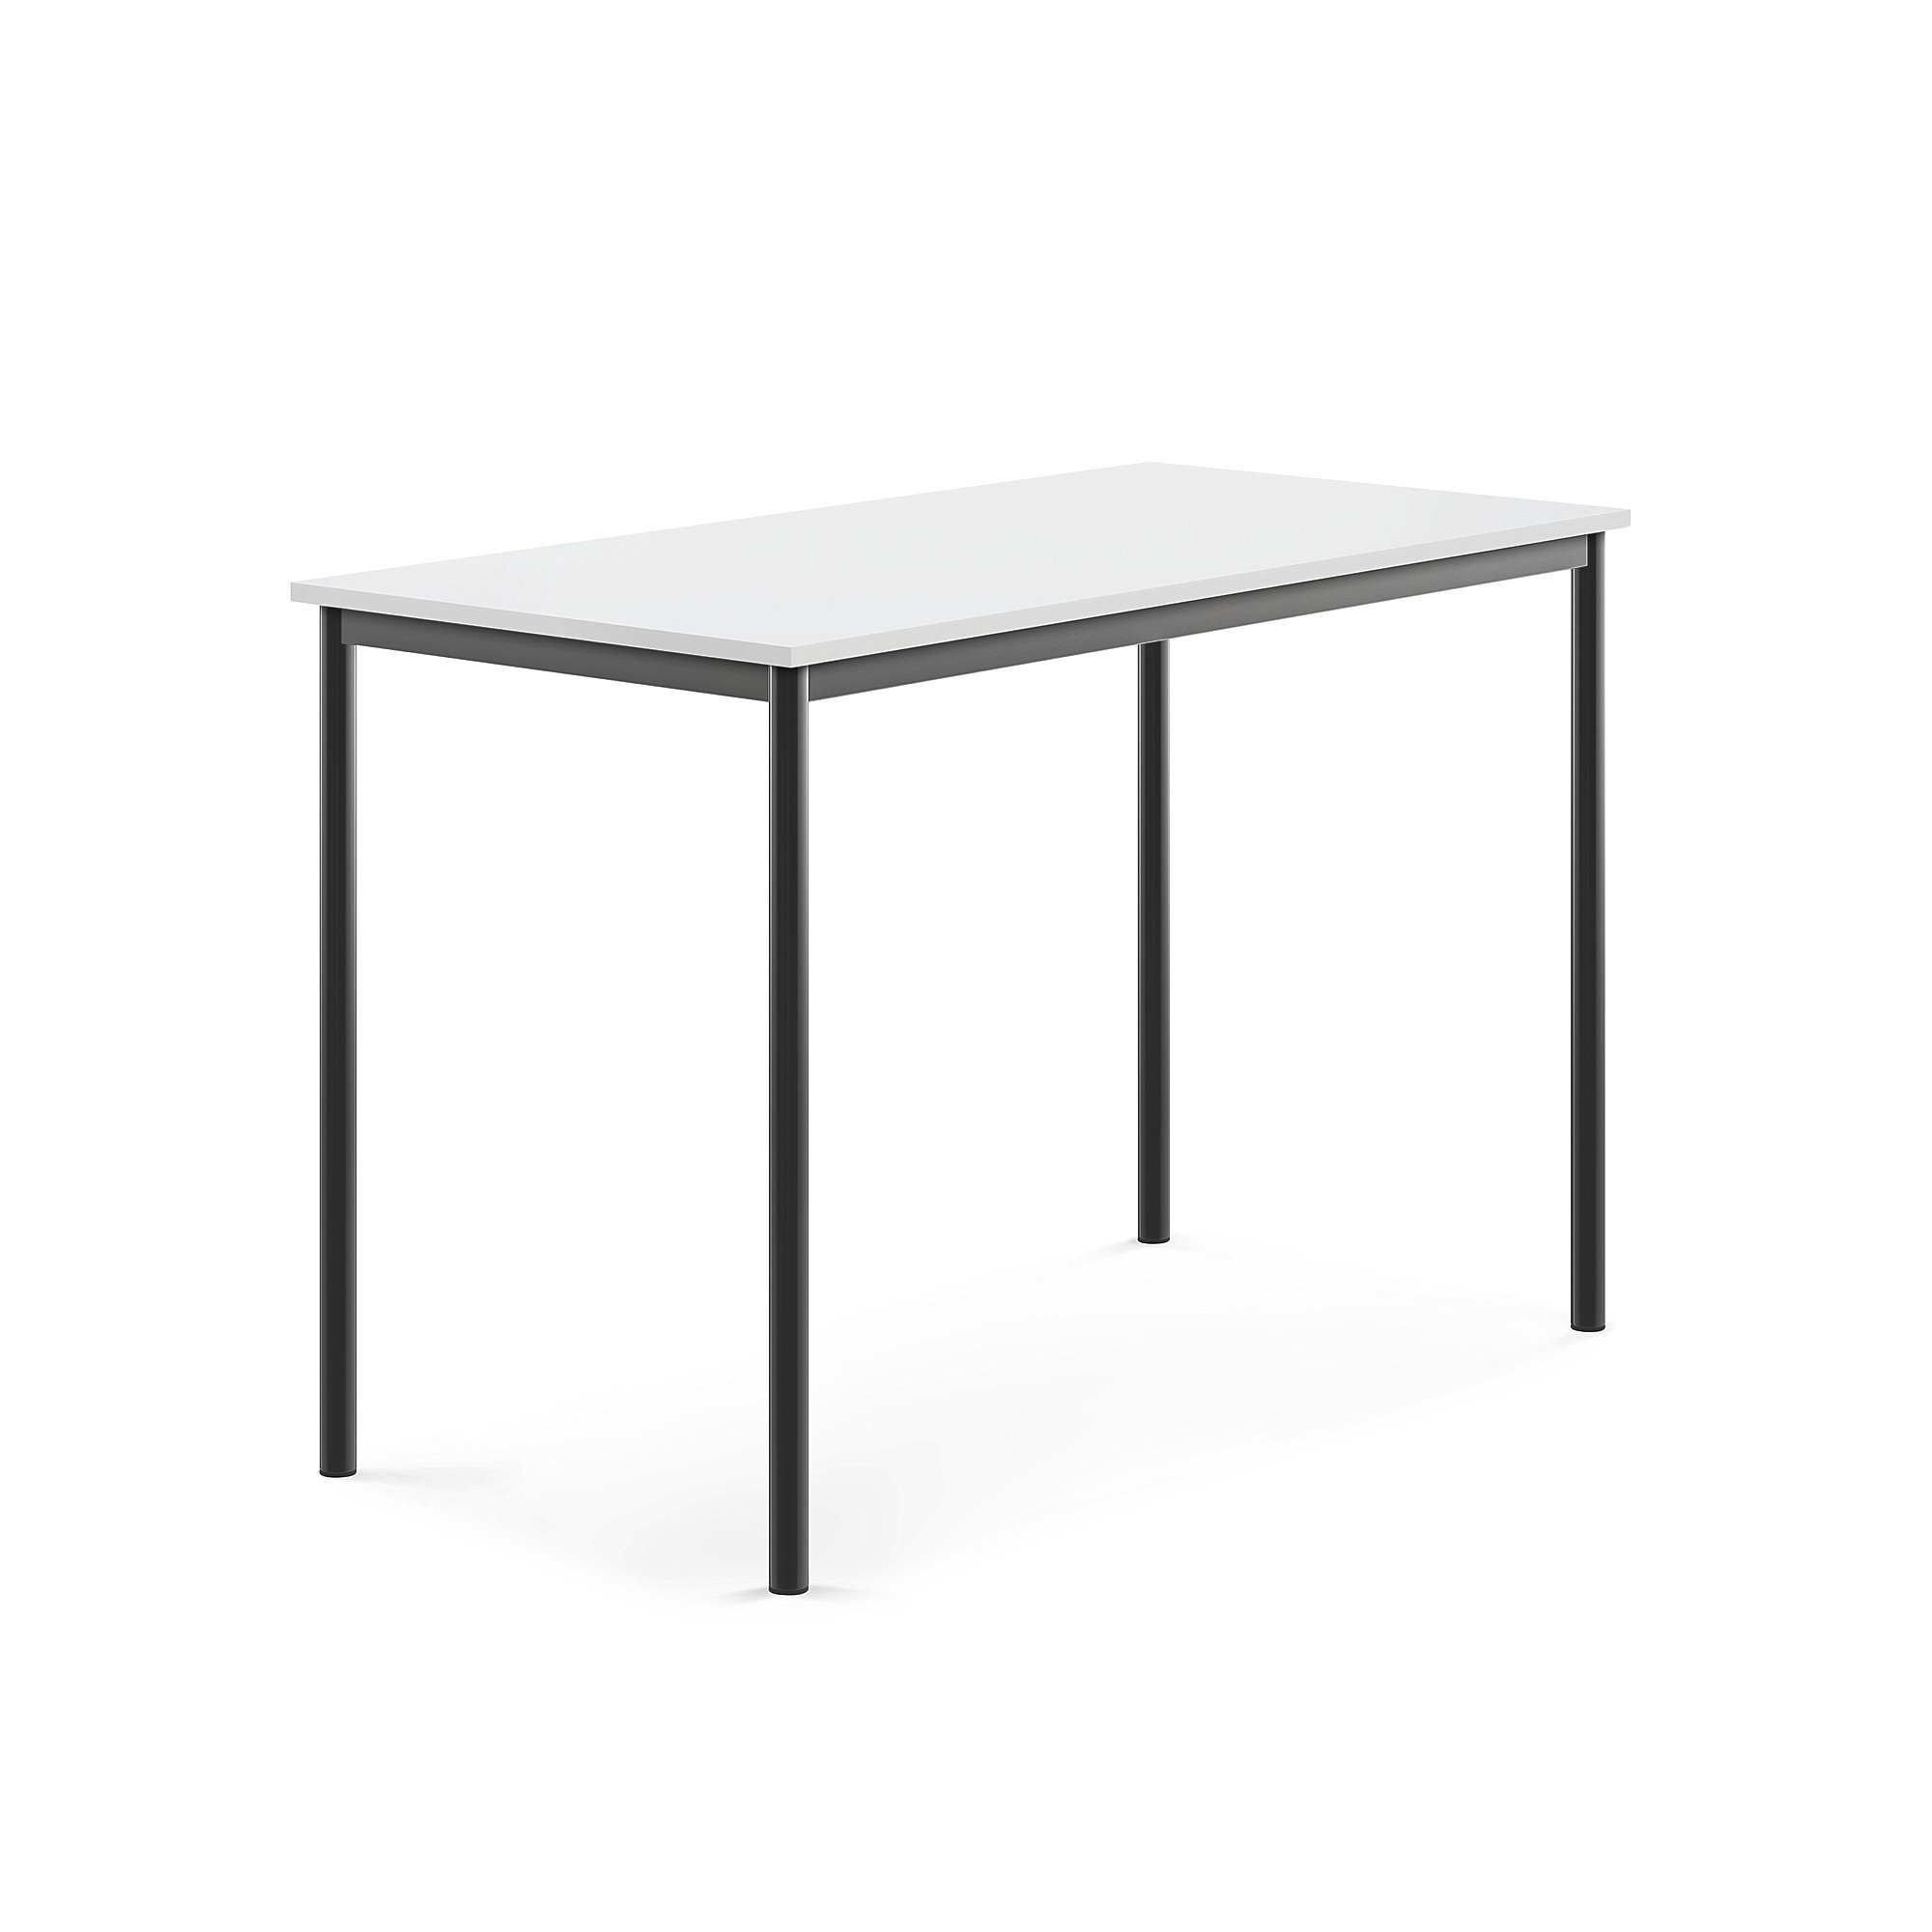 Stůl BORÅS, 1400x700x900 mm, antracitově šedé nohy, HPL deska, bílá